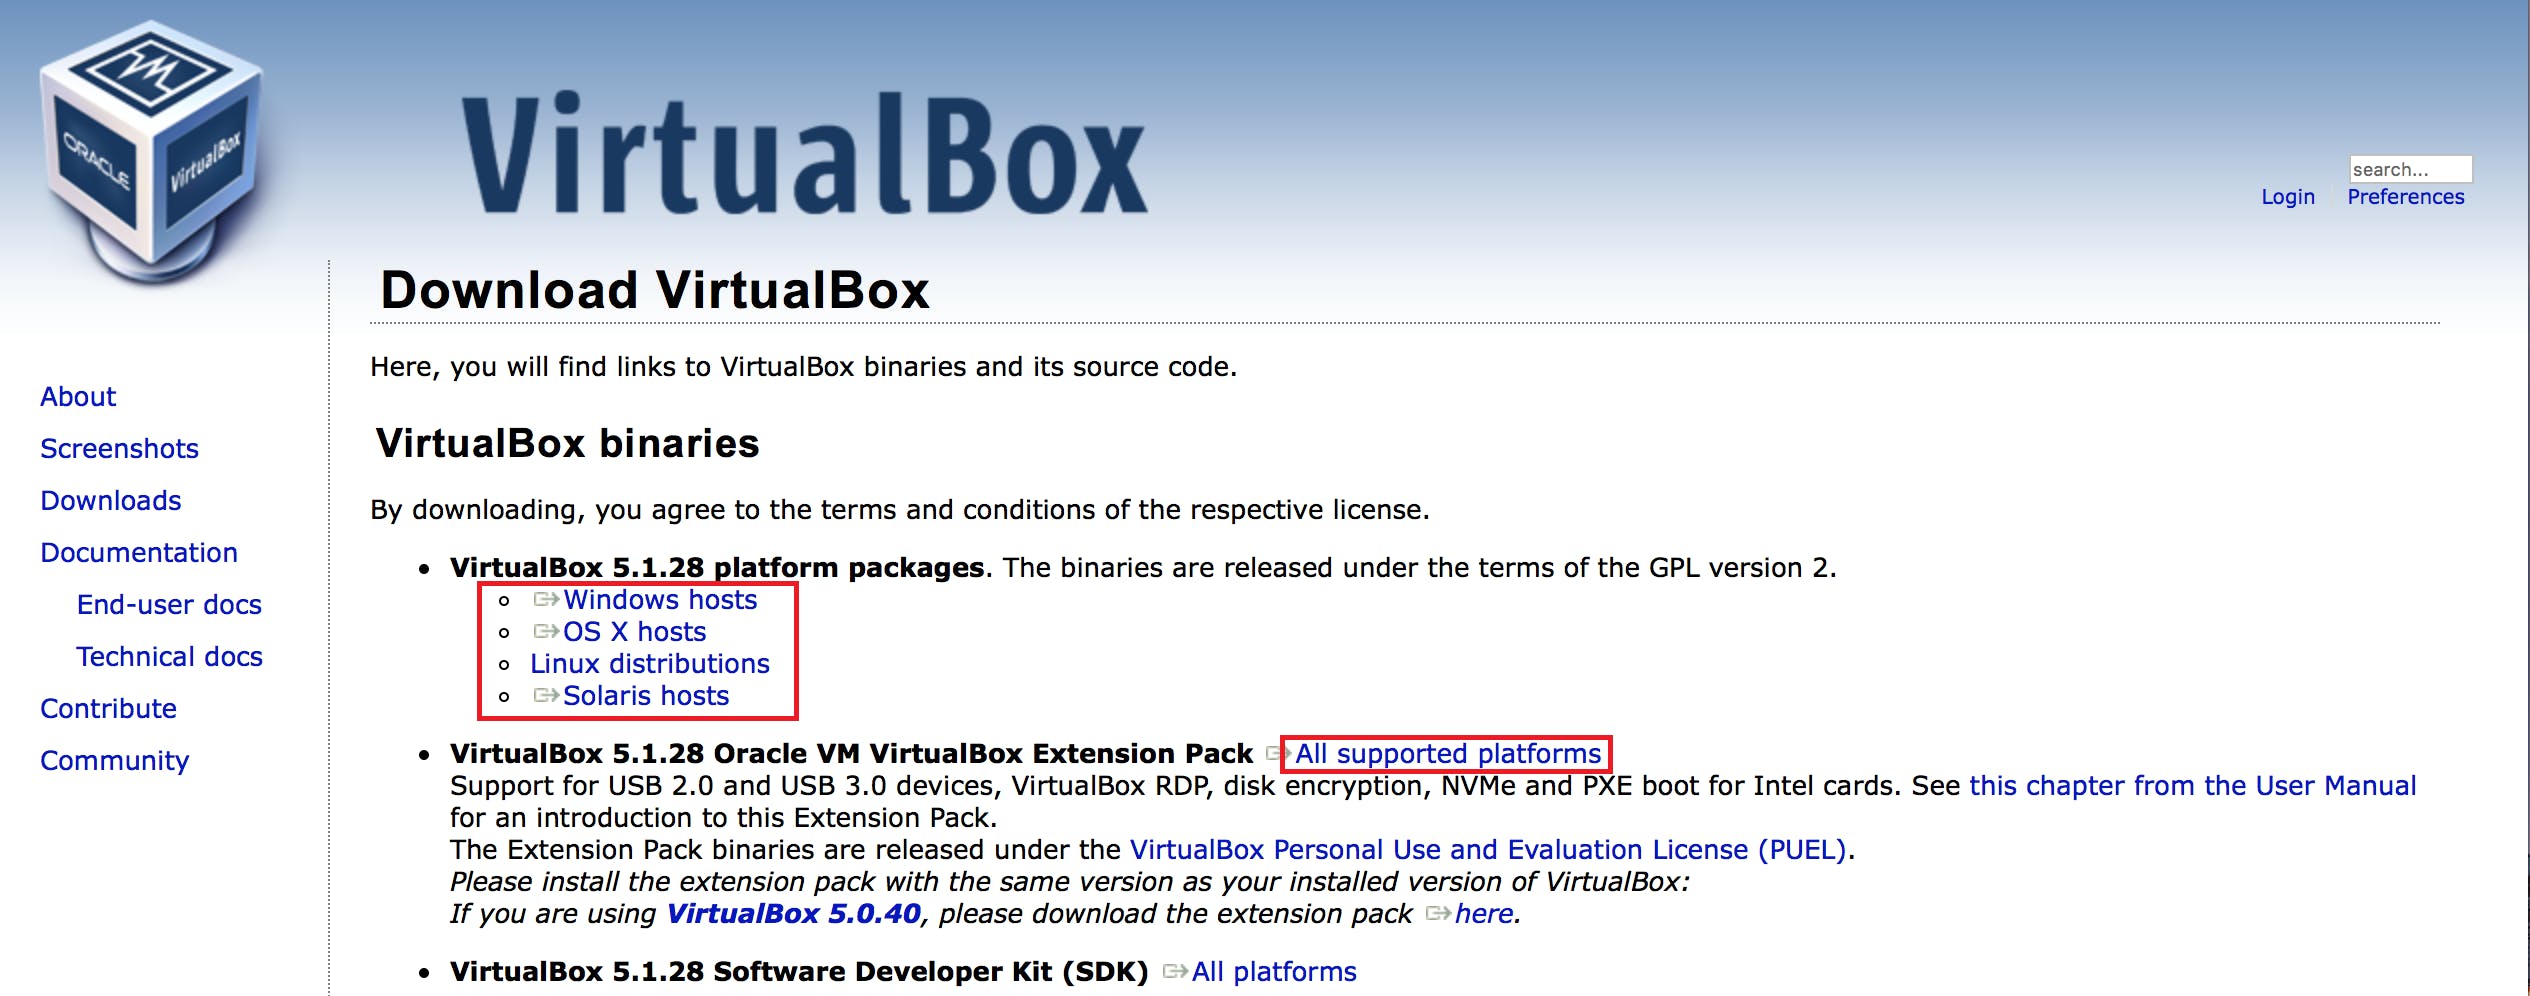 Installing VirtualBox - McCombs Tech Wiki - UT Austin Wikis